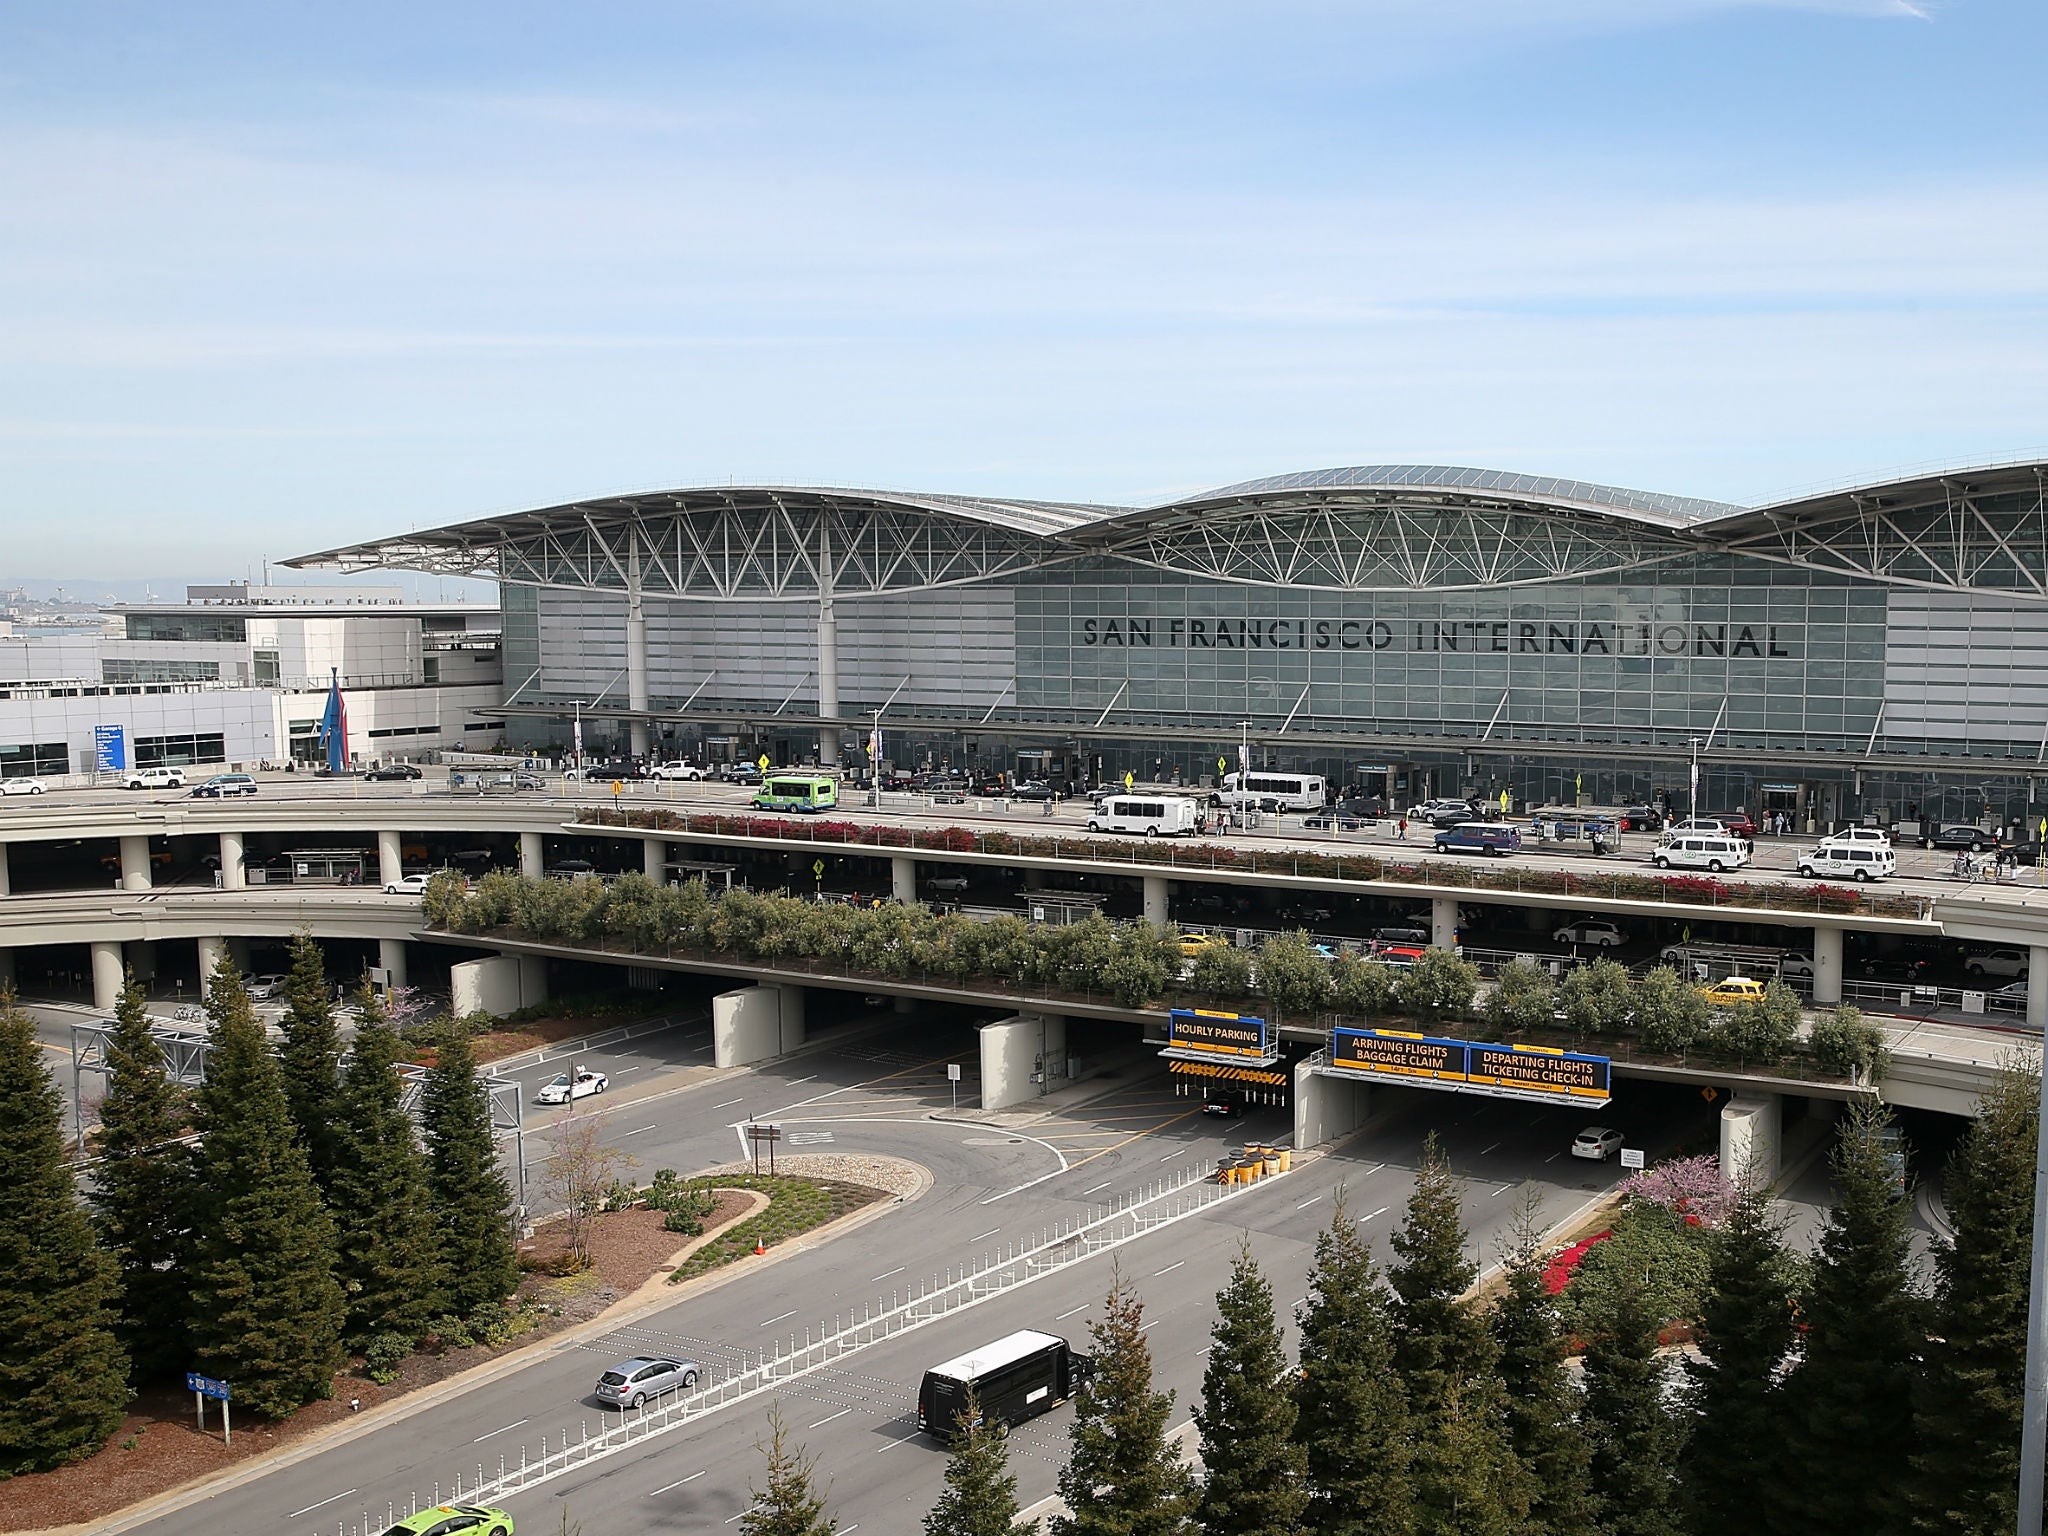 A view of the international terminal at San Francisco International Airport